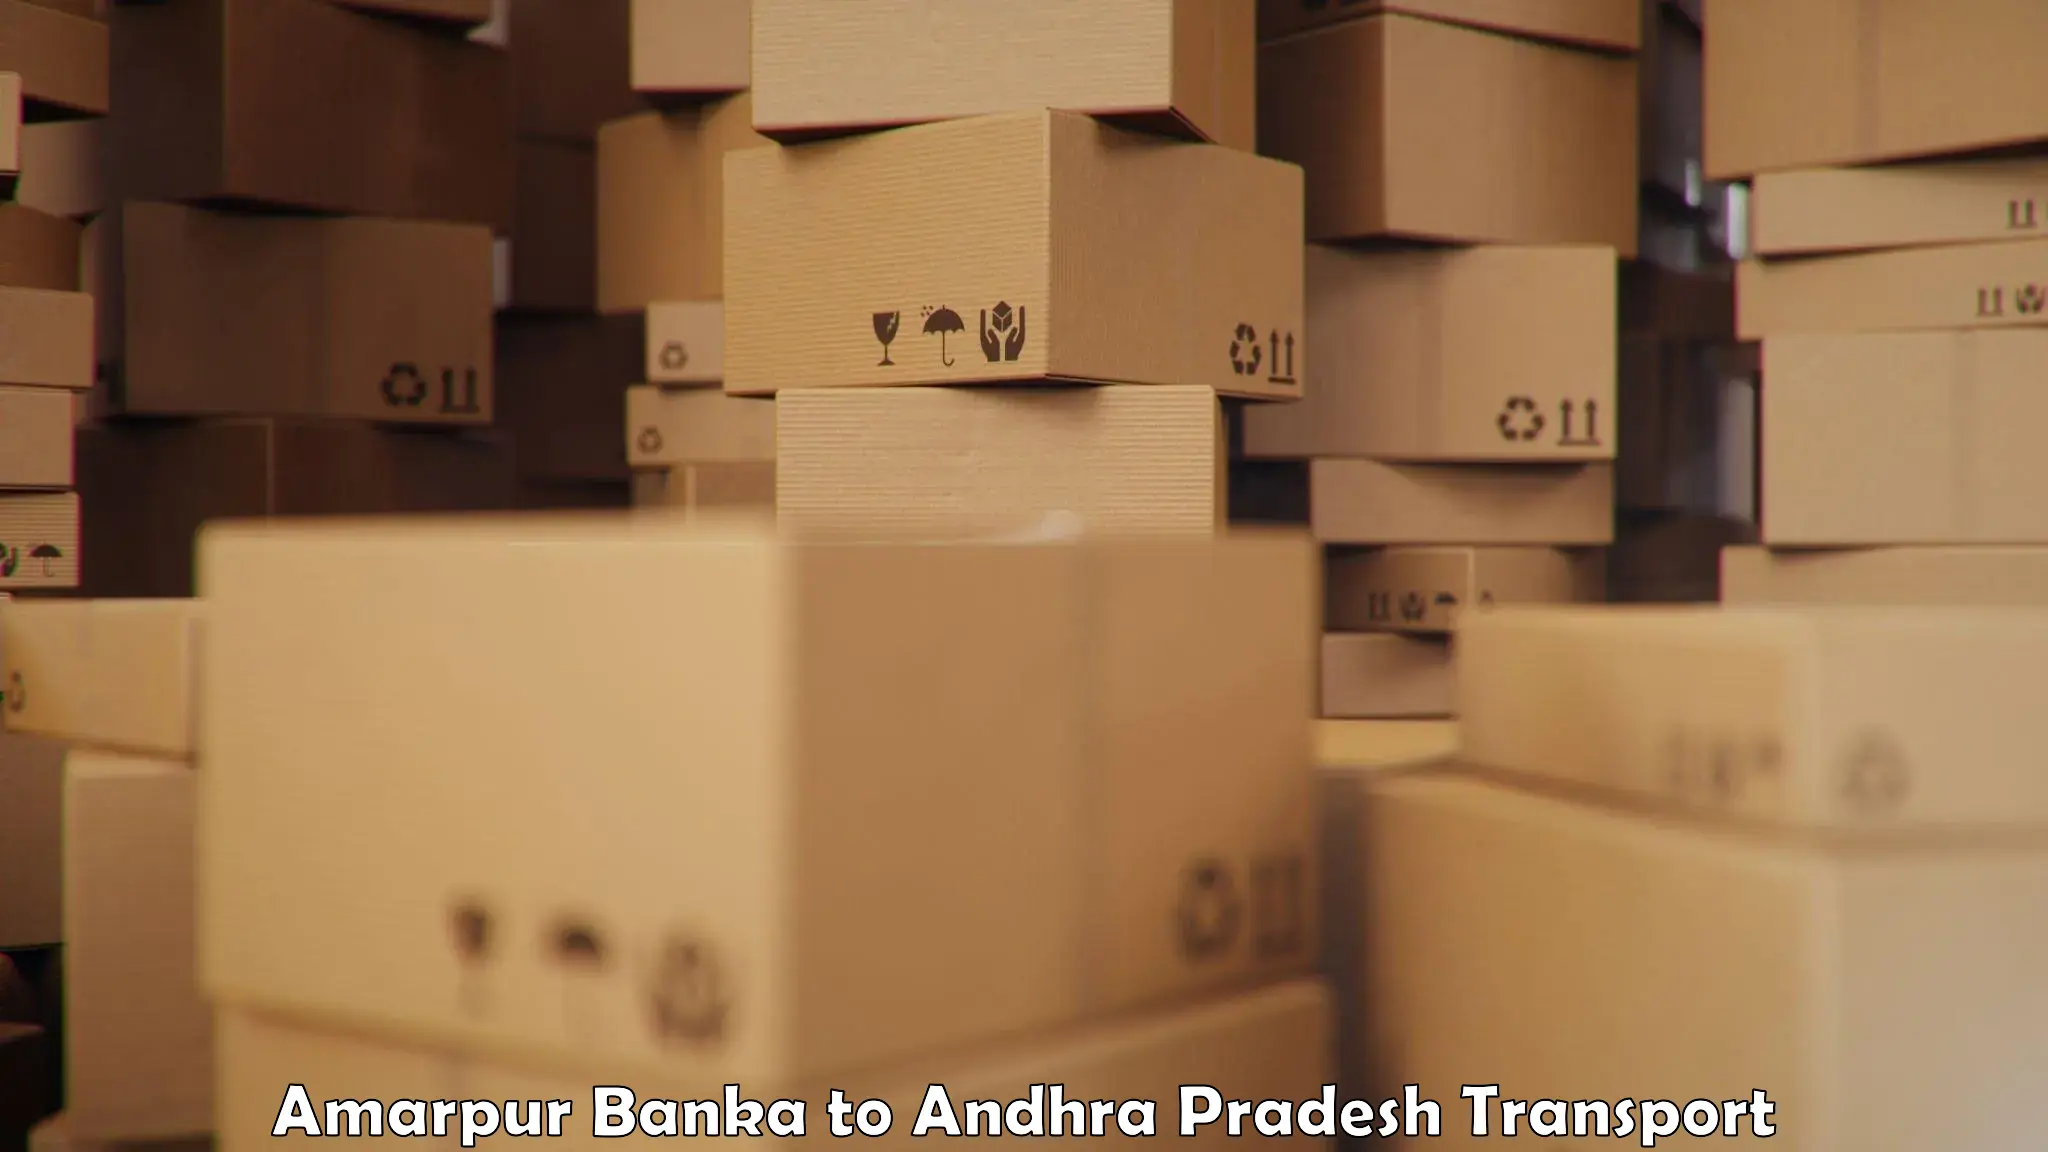 Commercial transport service Amarpur Banka to Palasa